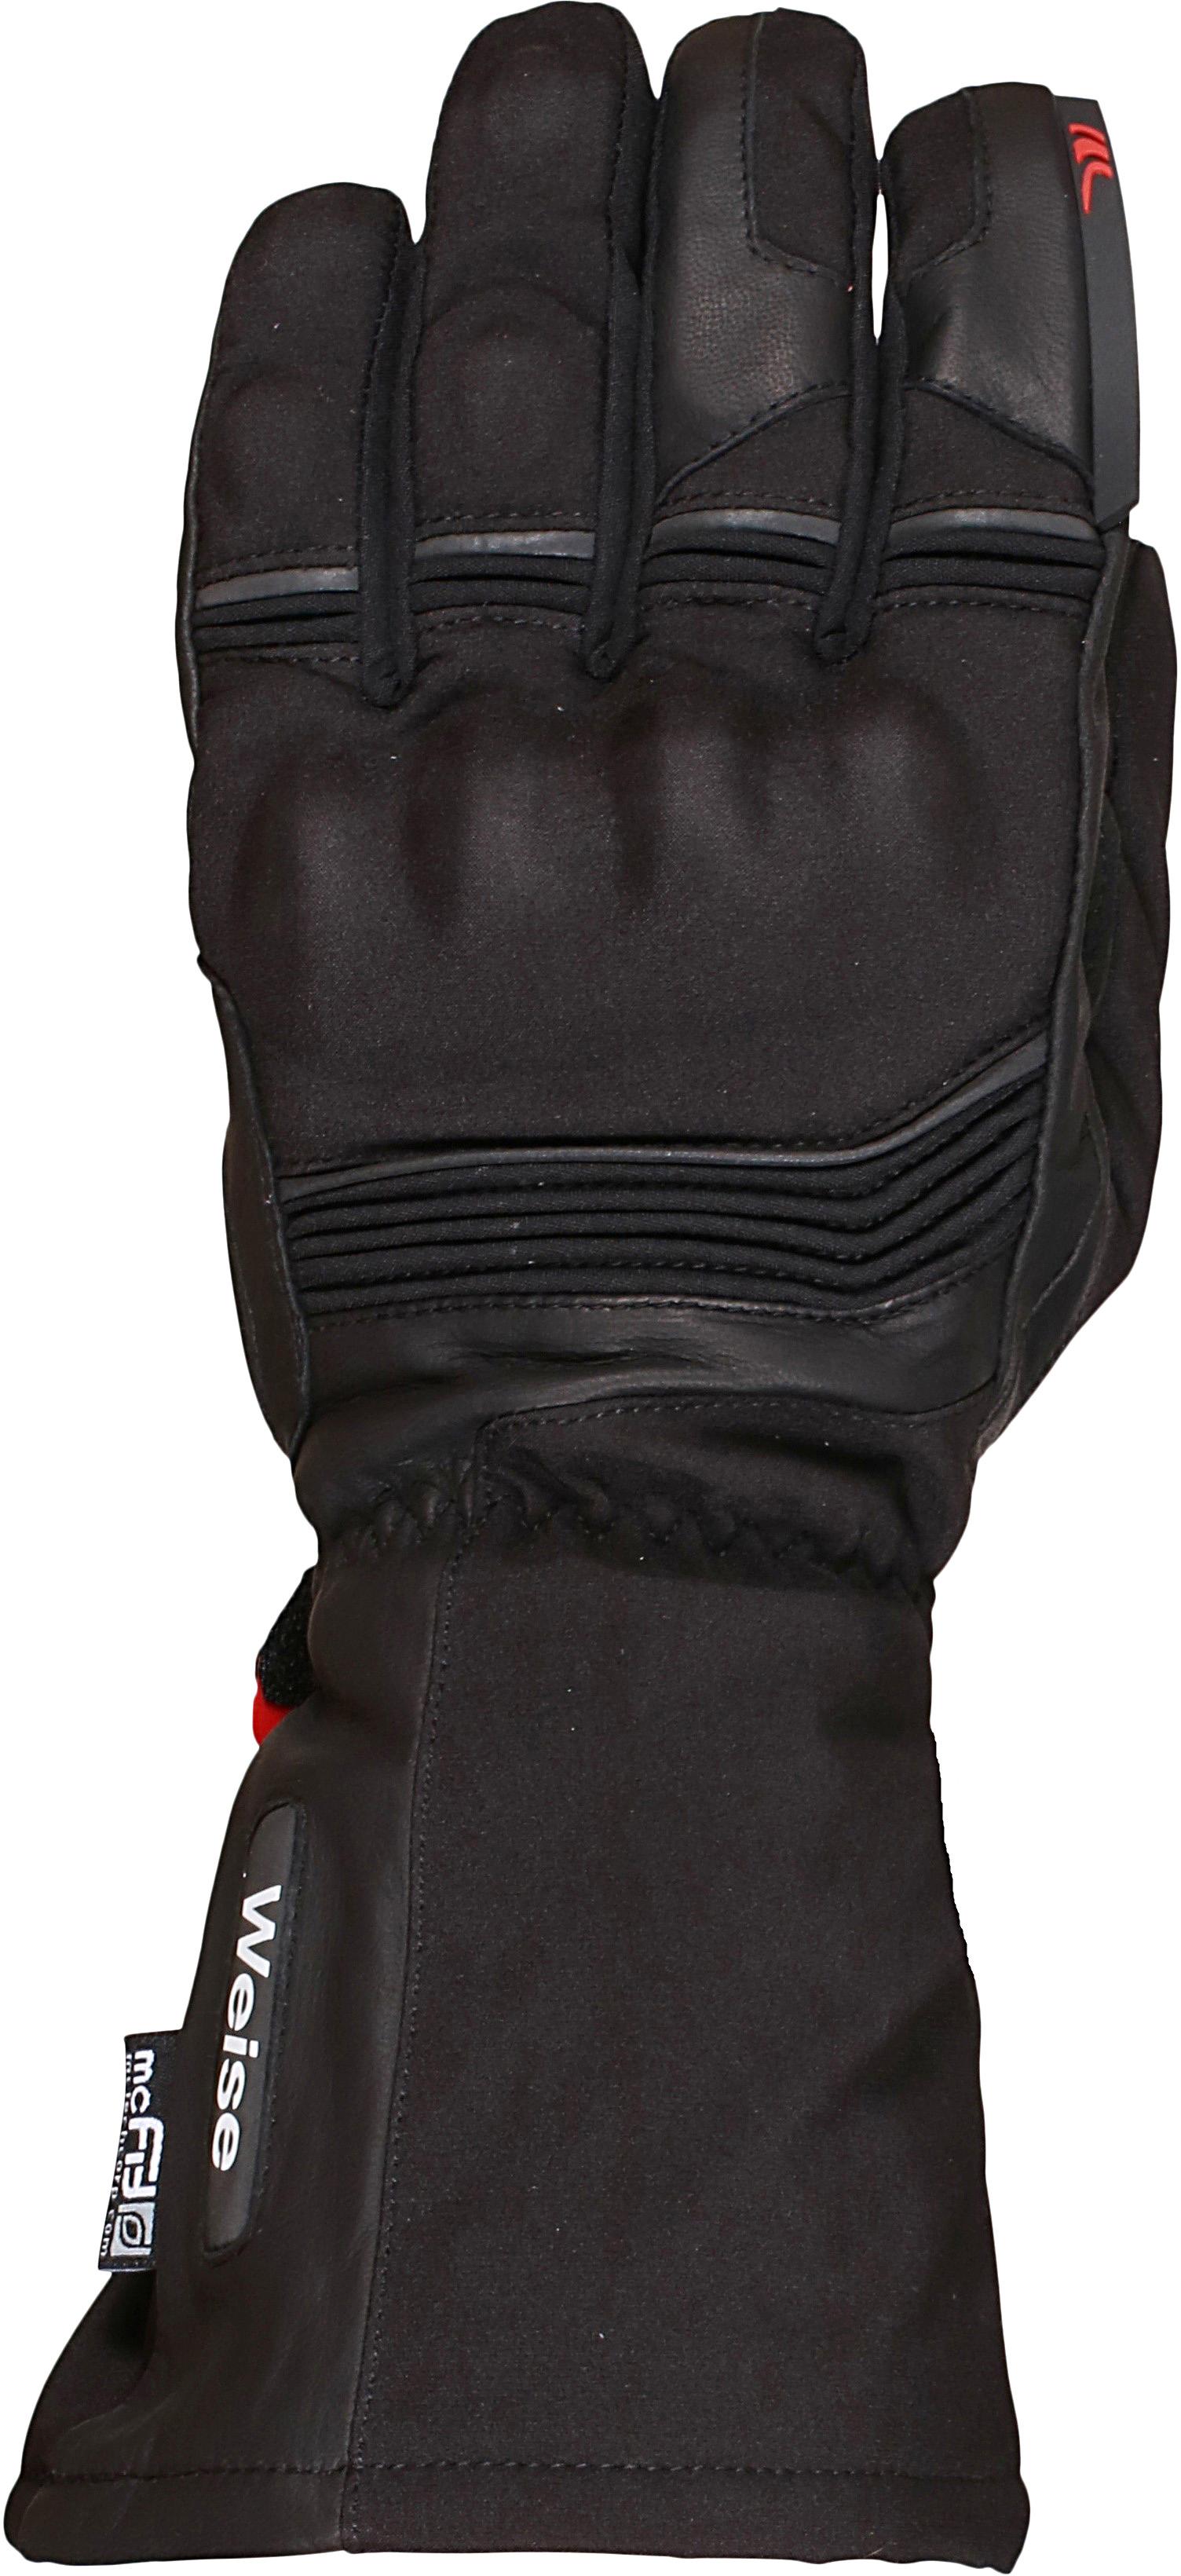 Weise Montana 150 Motorcycle Gloves - Black, 2Xl